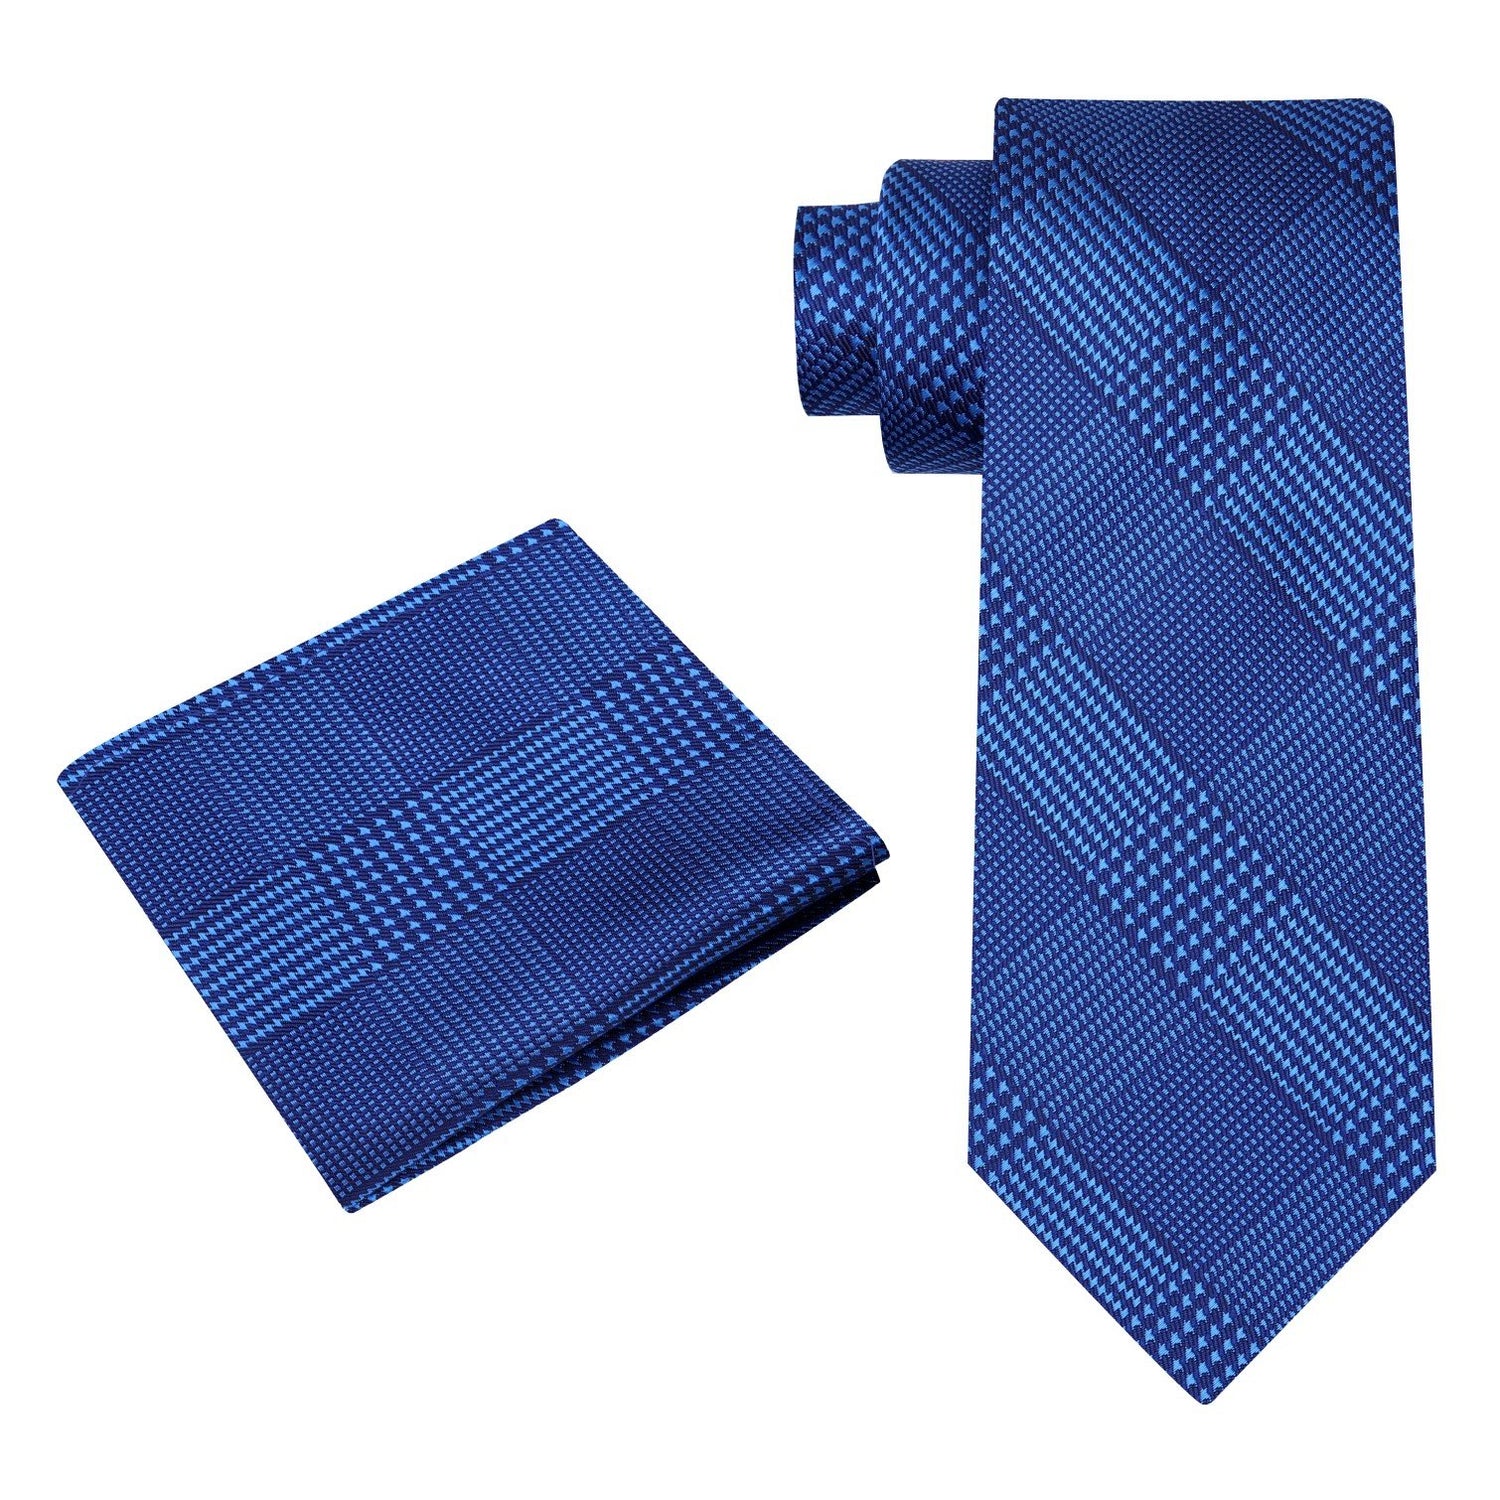 Alt view: Blue Geometric Tie and Pocket Square